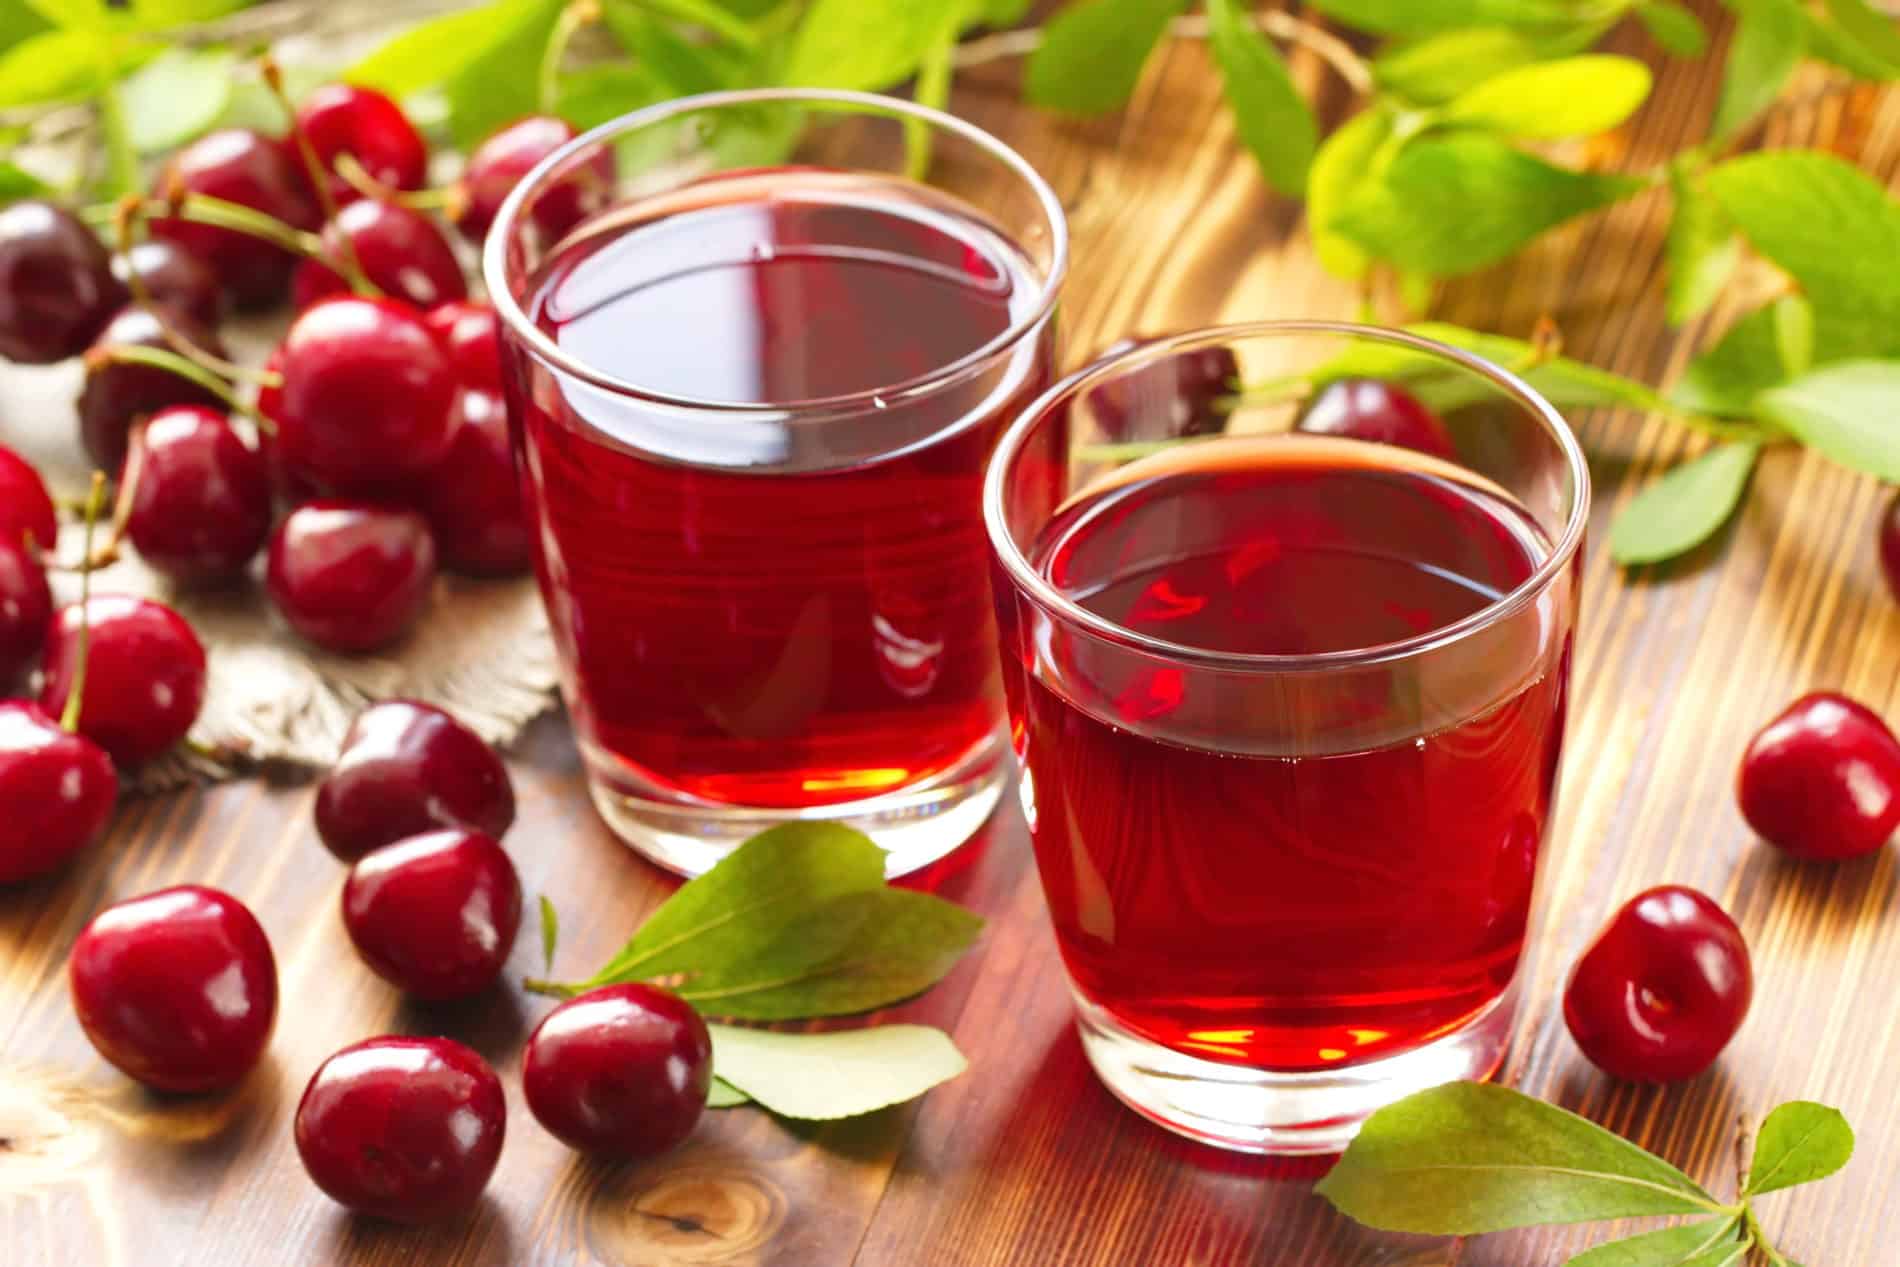 Tart Cherry Juice May Reduce Blood Pressure